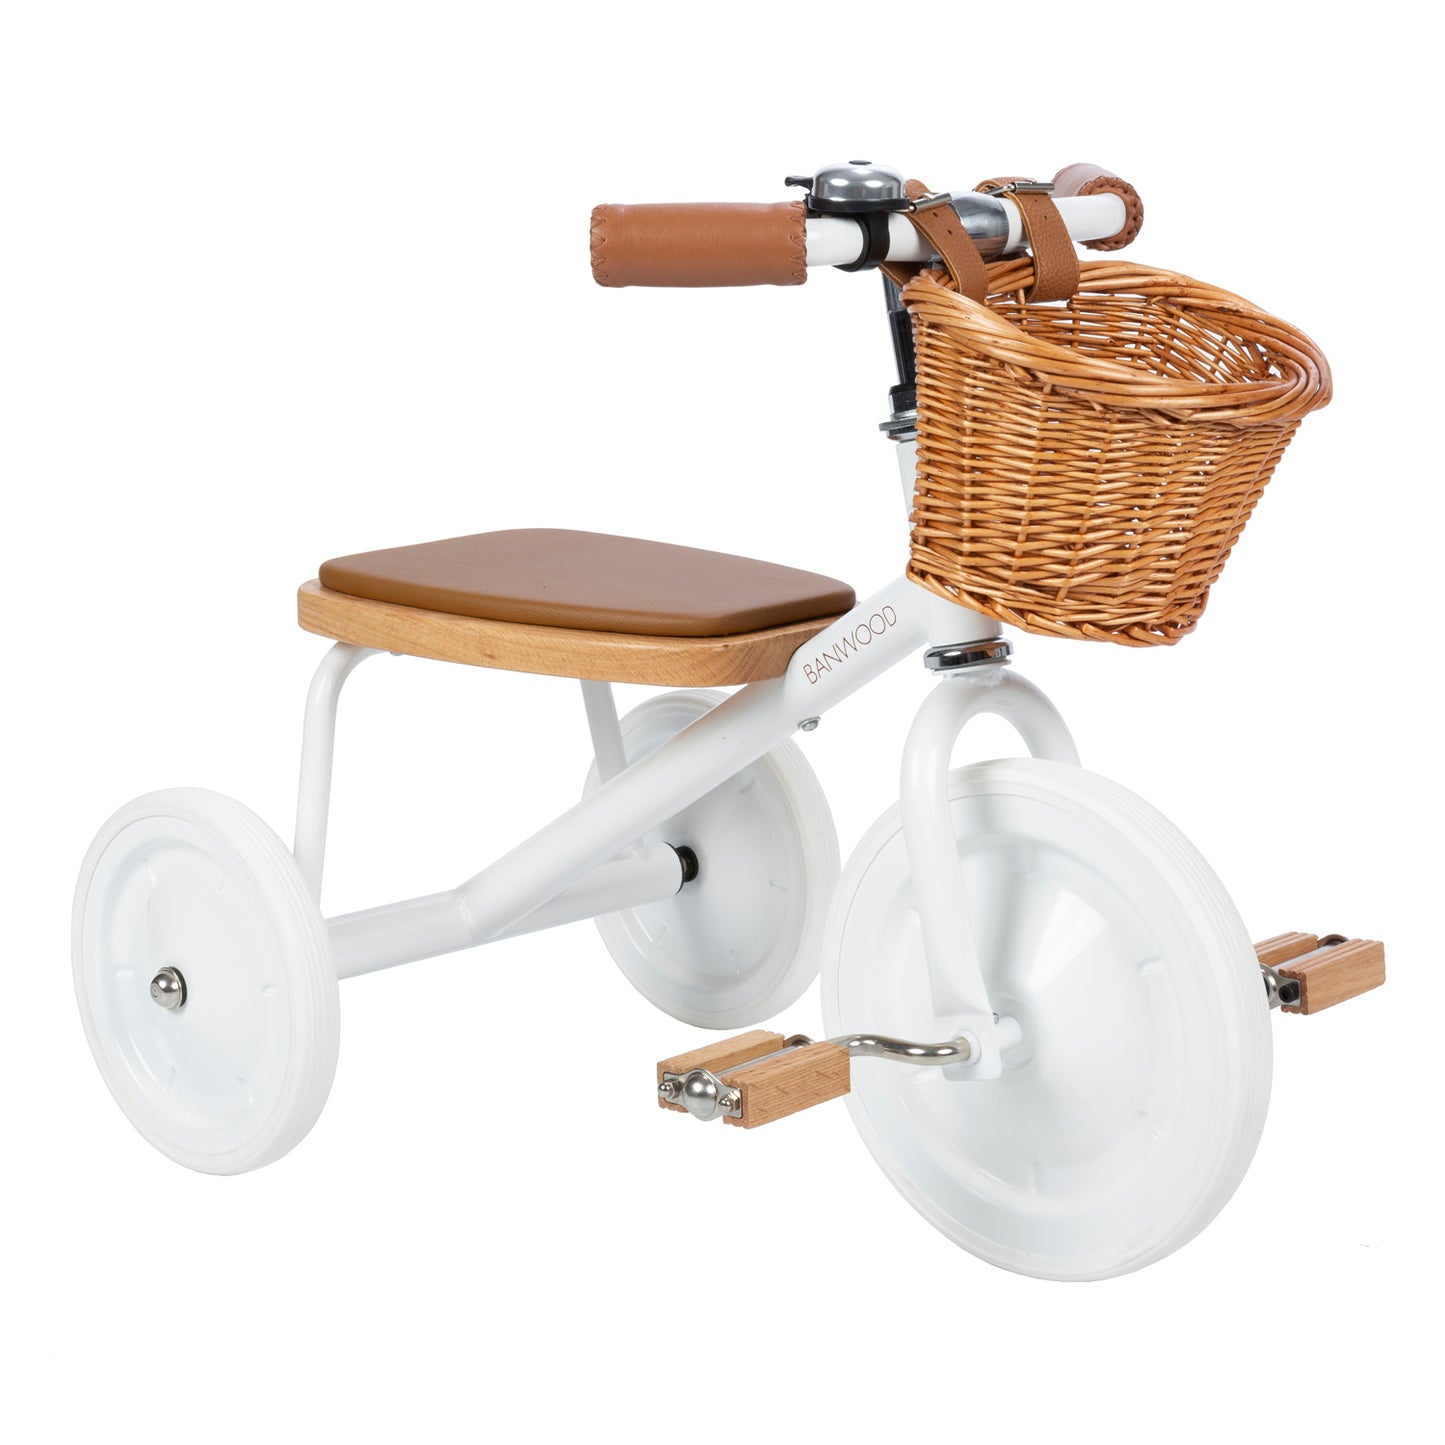 Banwood Trike - Age 2+